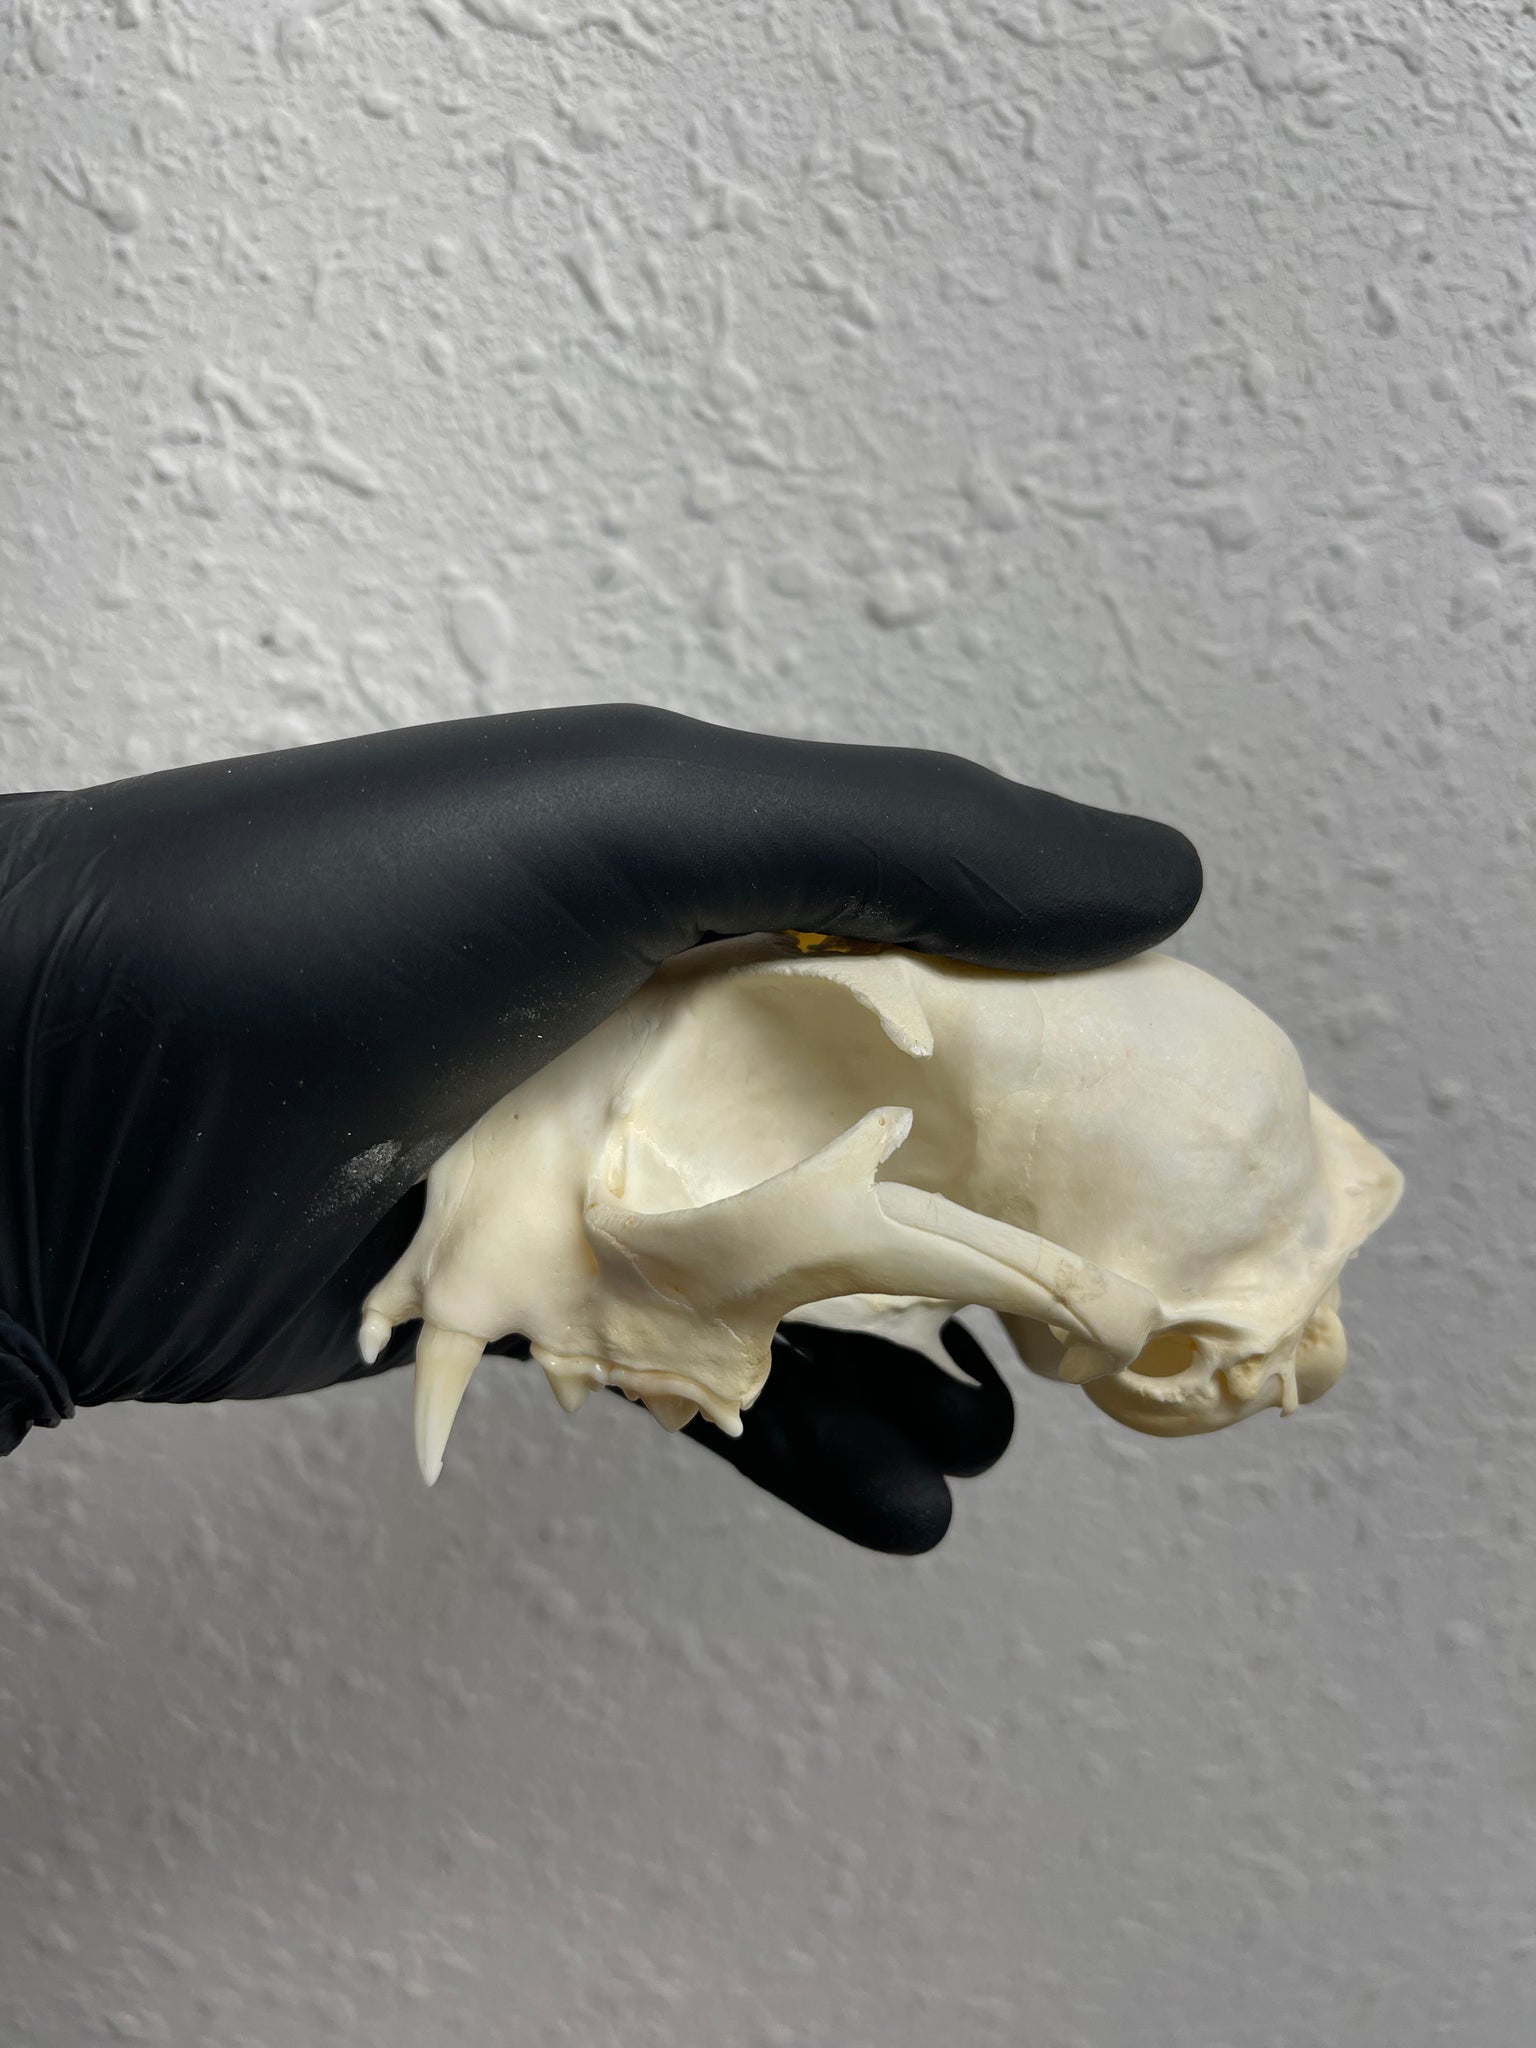 Reserved for Kaitlyn Michelle - Craft Pathological Bobcat Skull